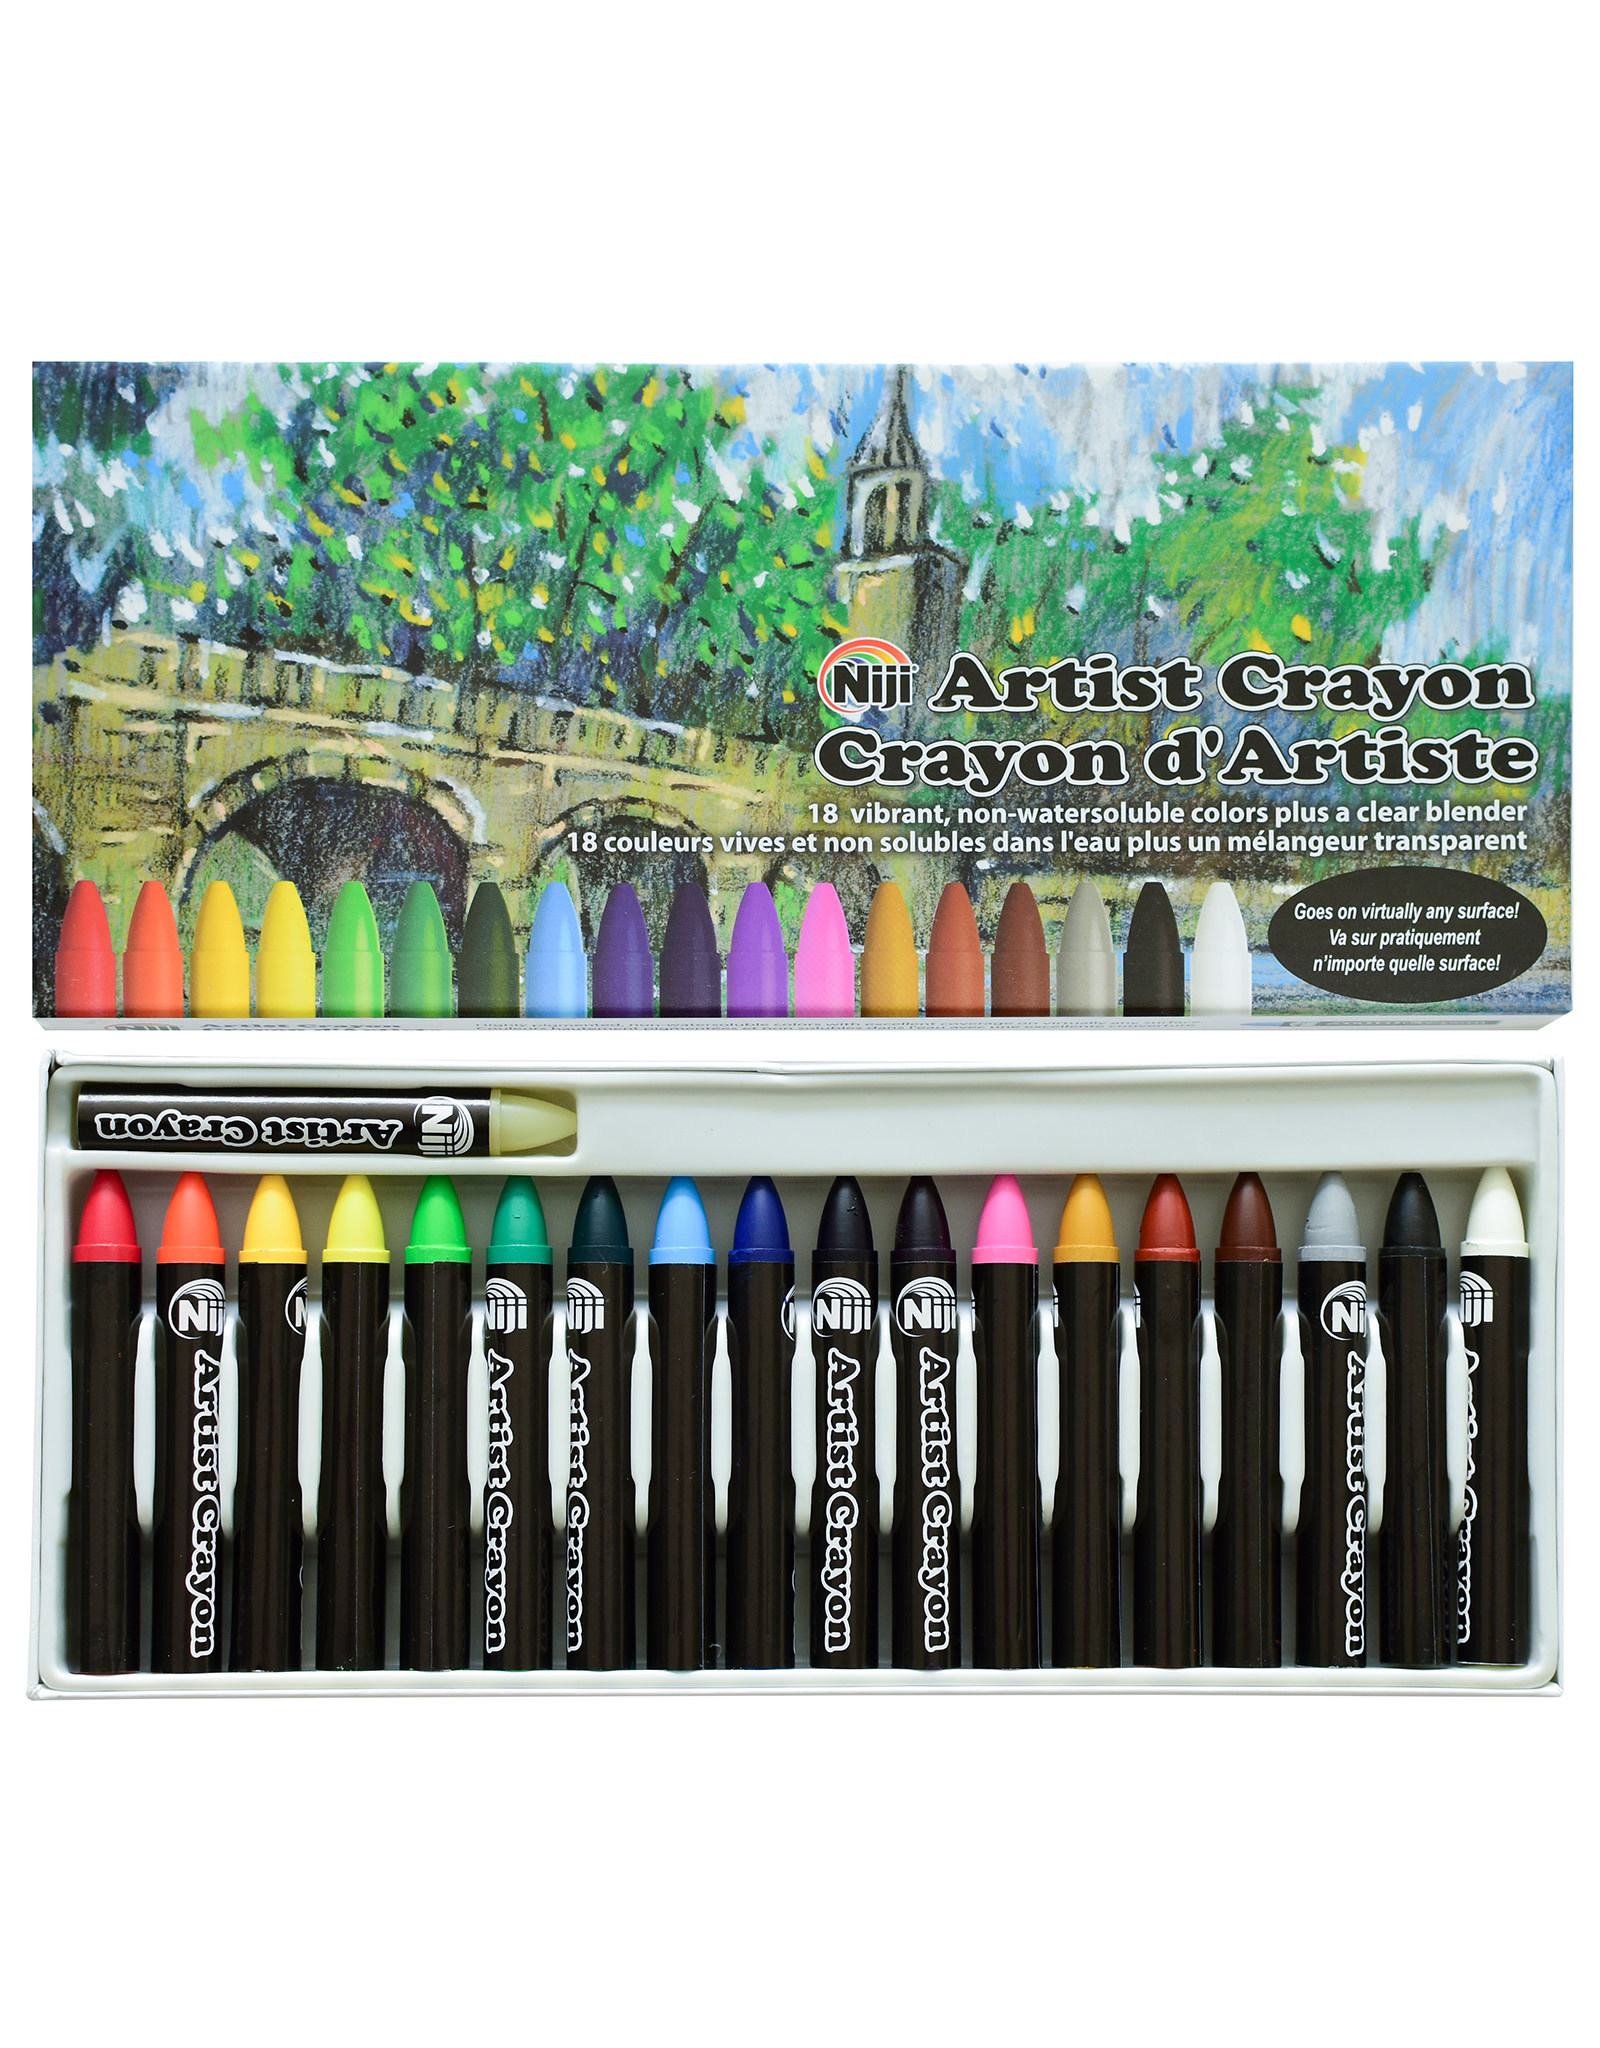 Mini Canvas Painting Kit, DIY Marbleizing, Crayola.com